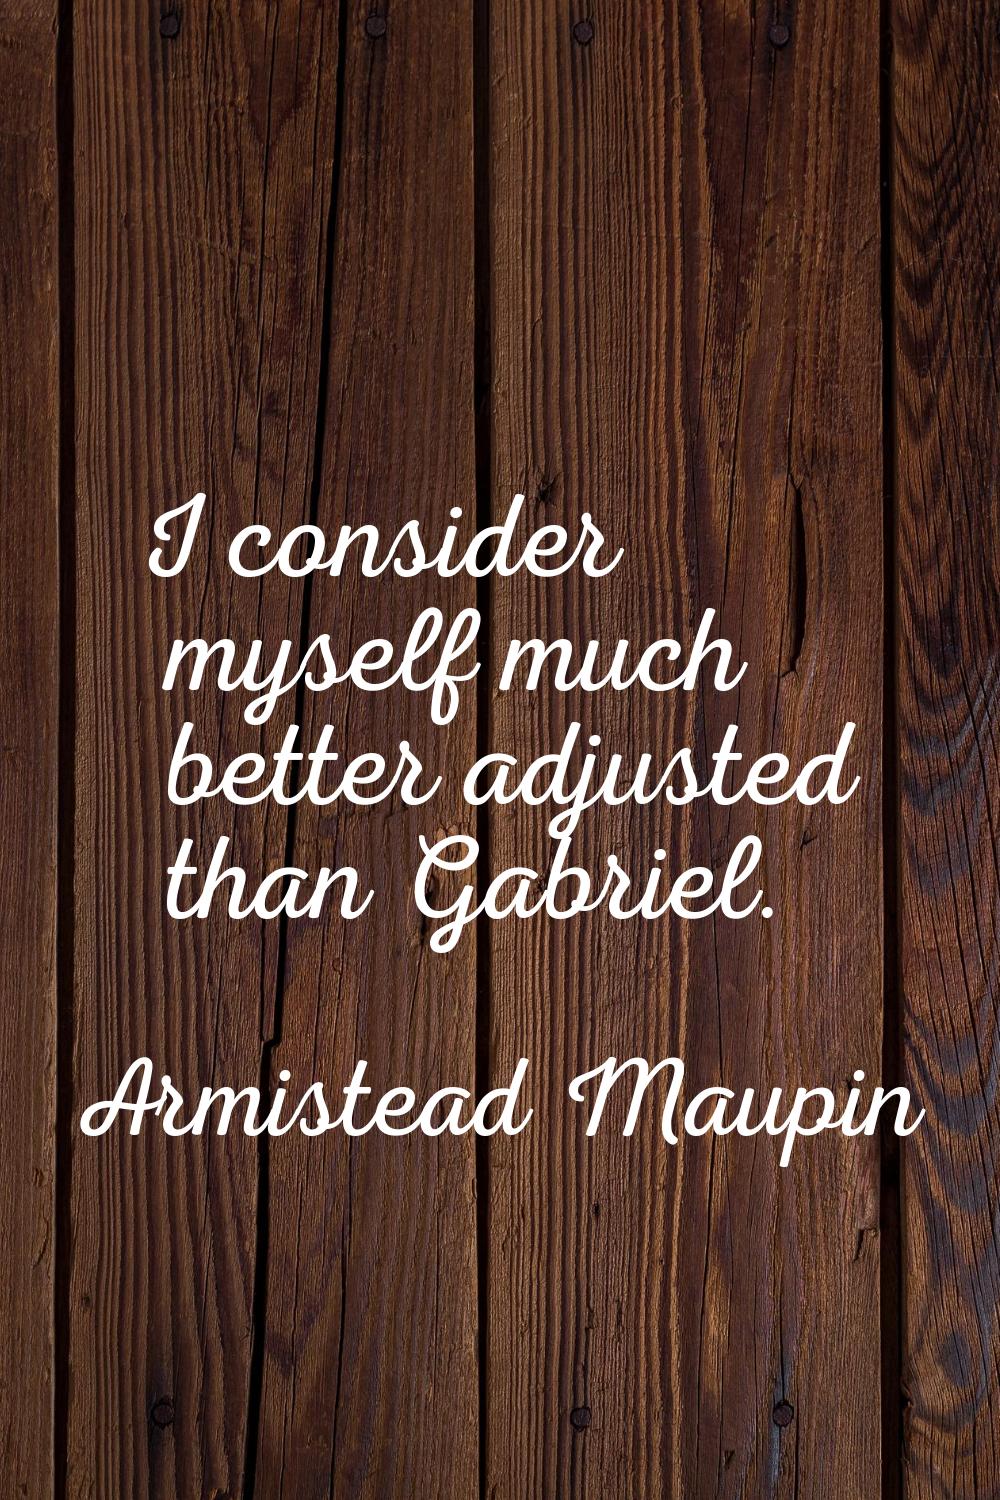 I consider myself much better adjusted than Gabriel.